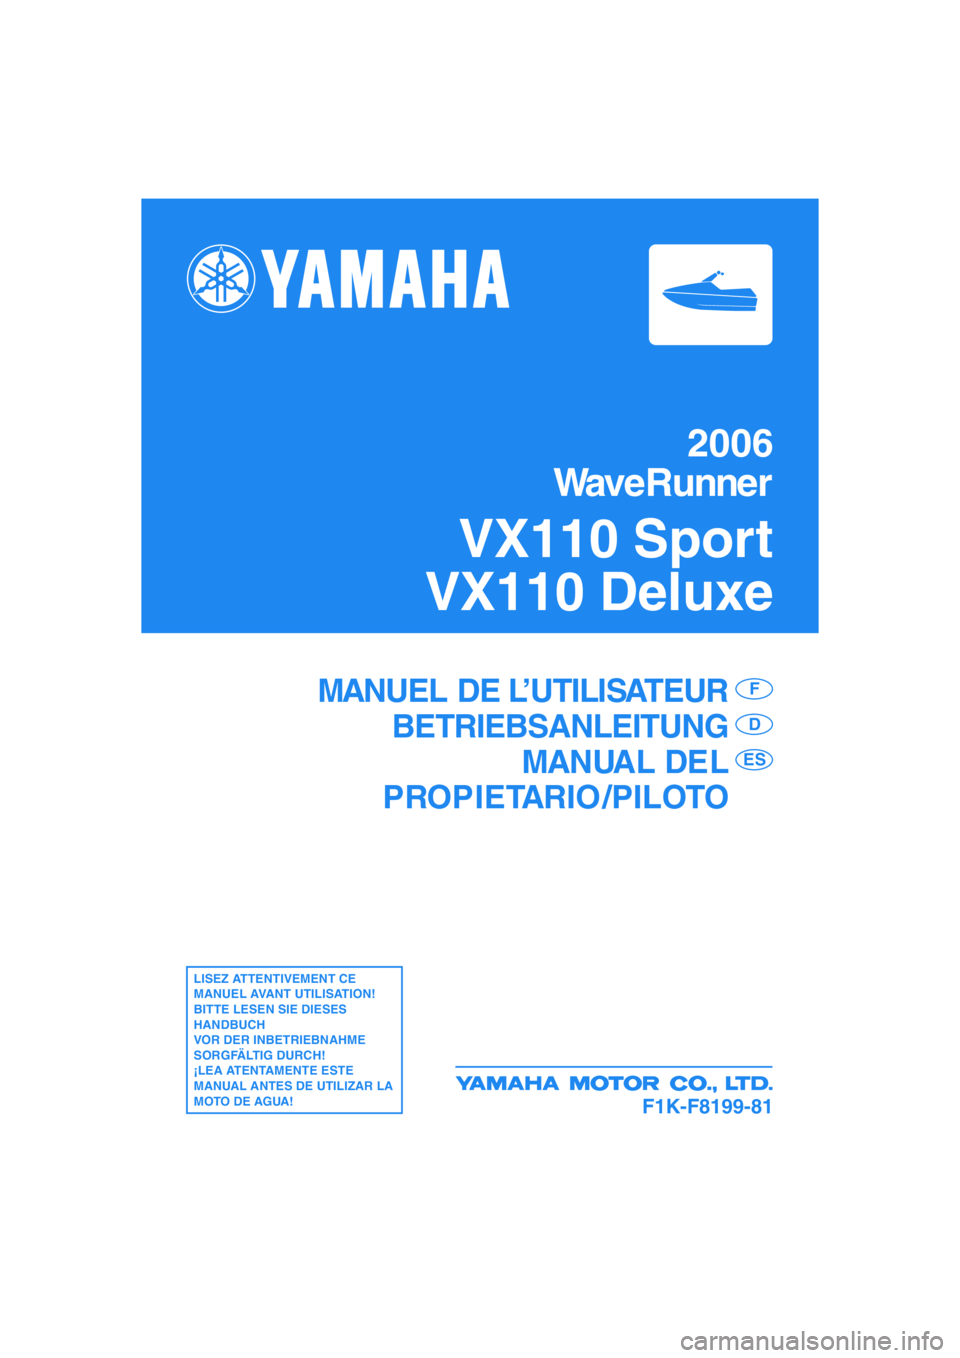 YAMAHA VX SPORT 2006  Manuale de Empleo (in Spanish) 